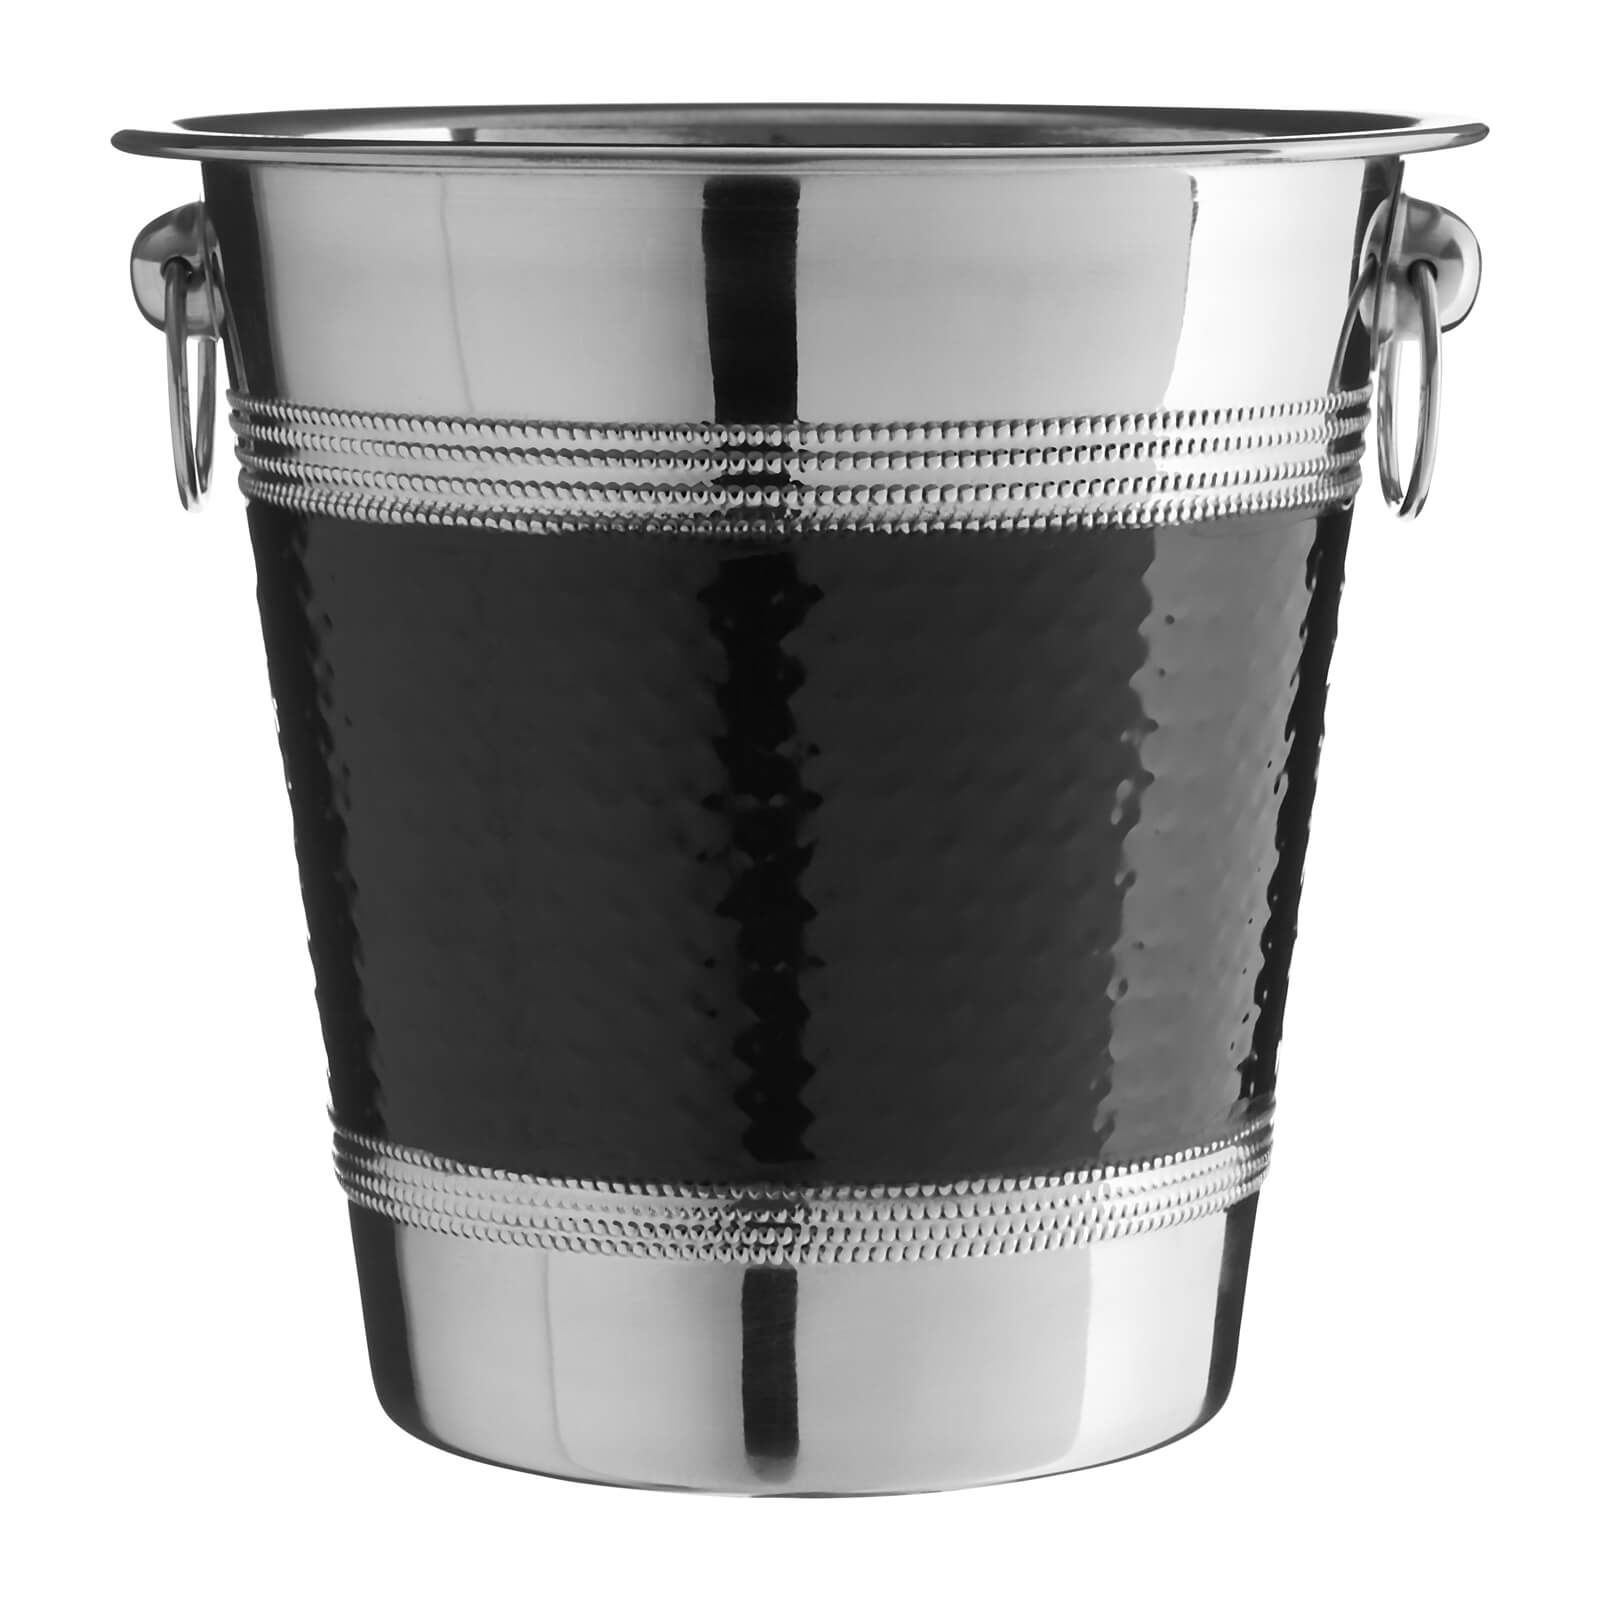 Champagne Wine Bucket - Hammered Black Band